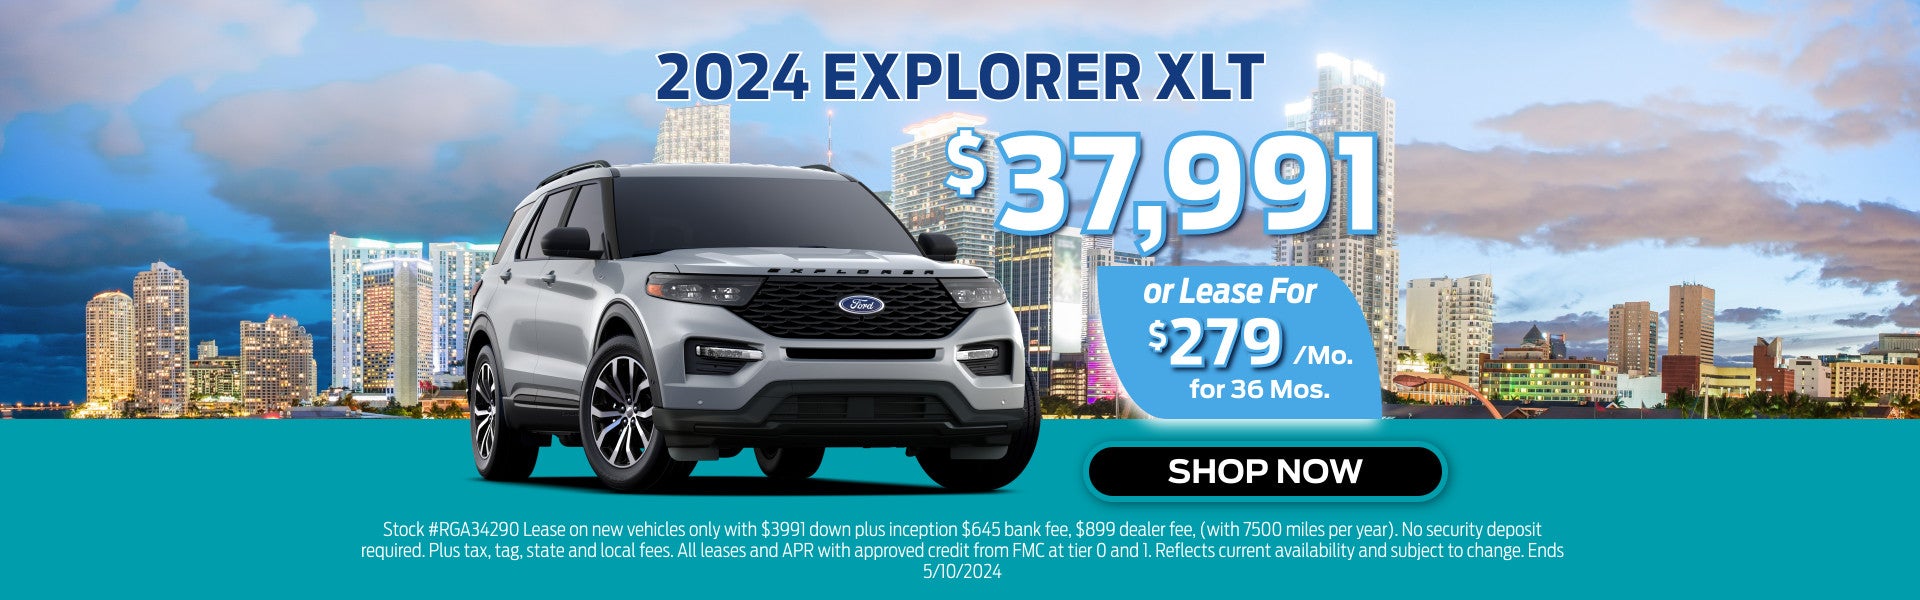 2024 Ford Explorer XLT, $37,991 or $279 for 36 months